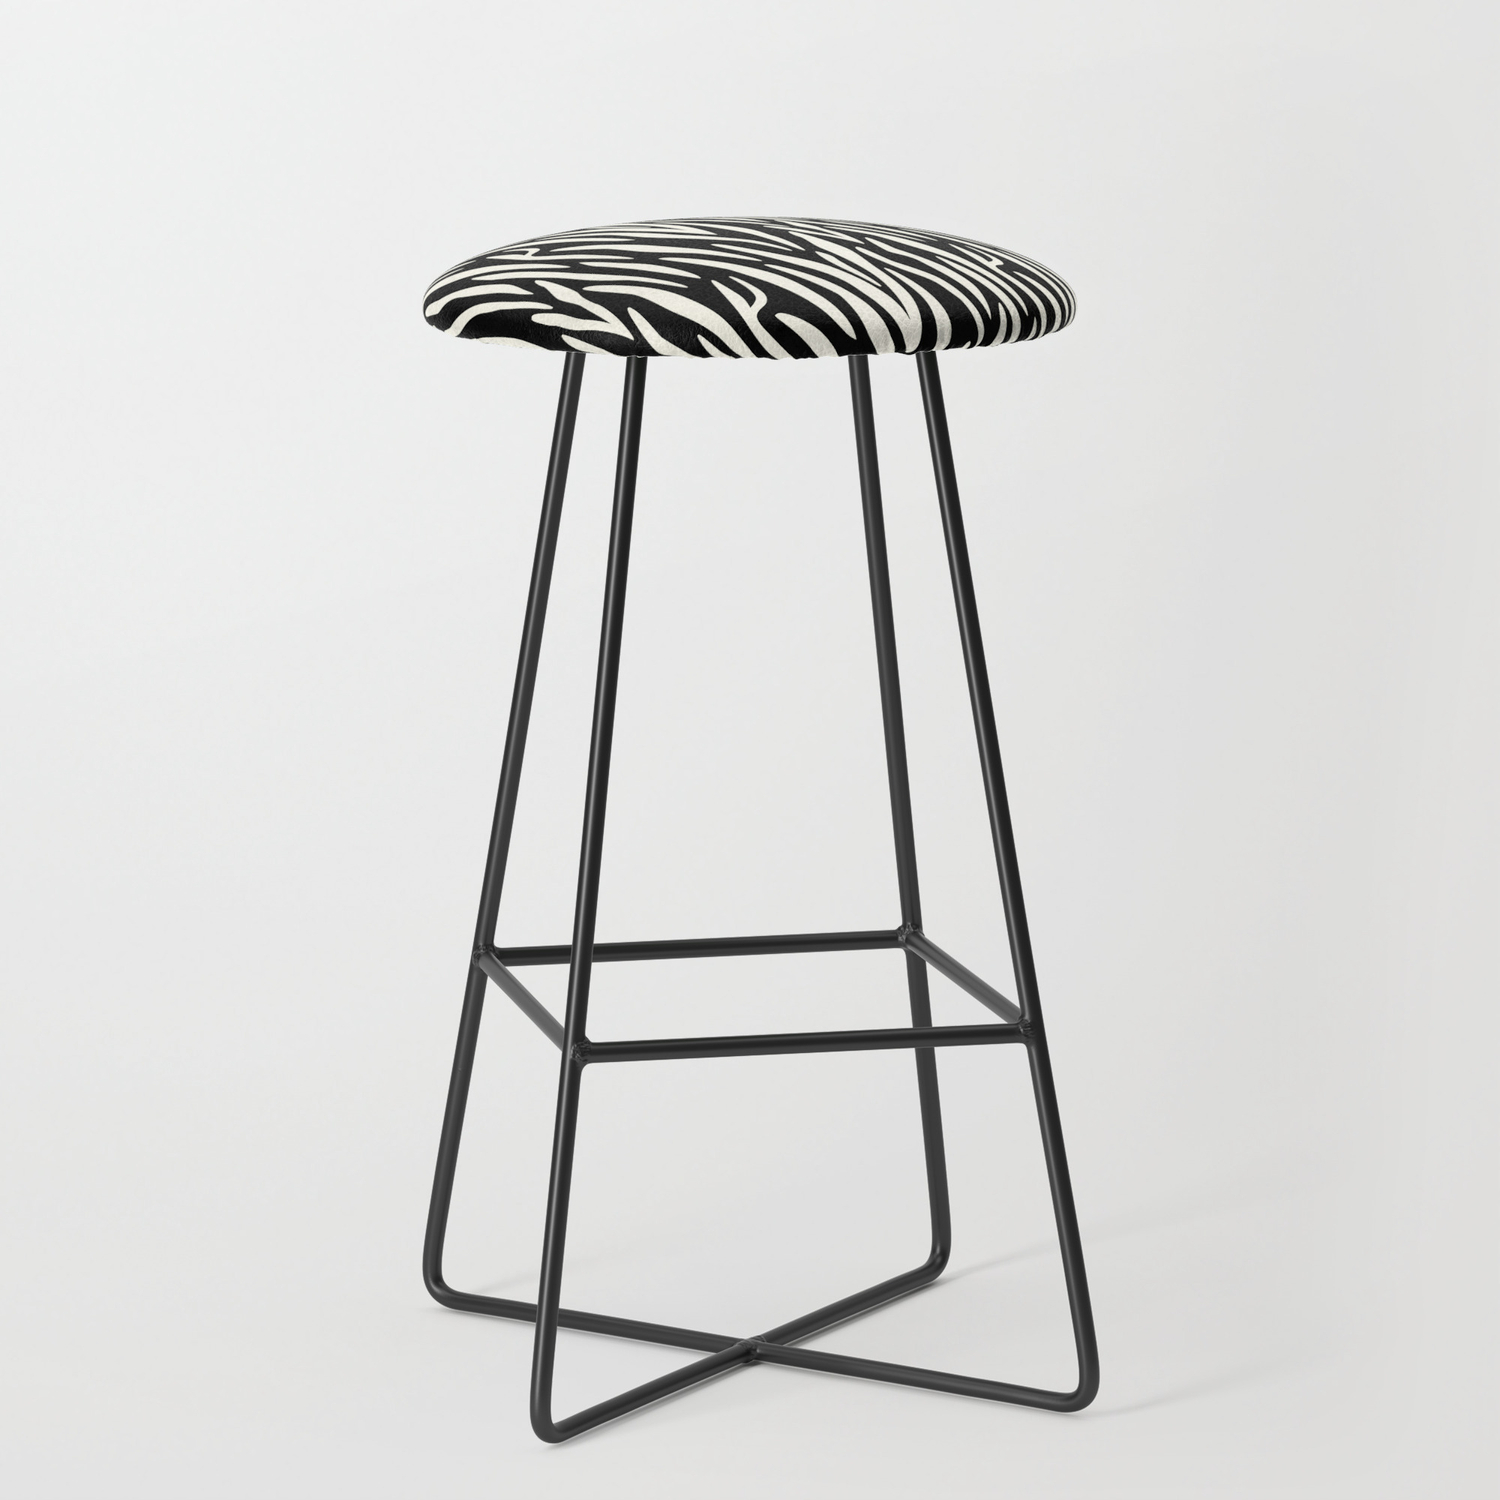 Zebra Print Bar Stool By Simple Luxe, Zebra Bar Stools Hobby Lobby